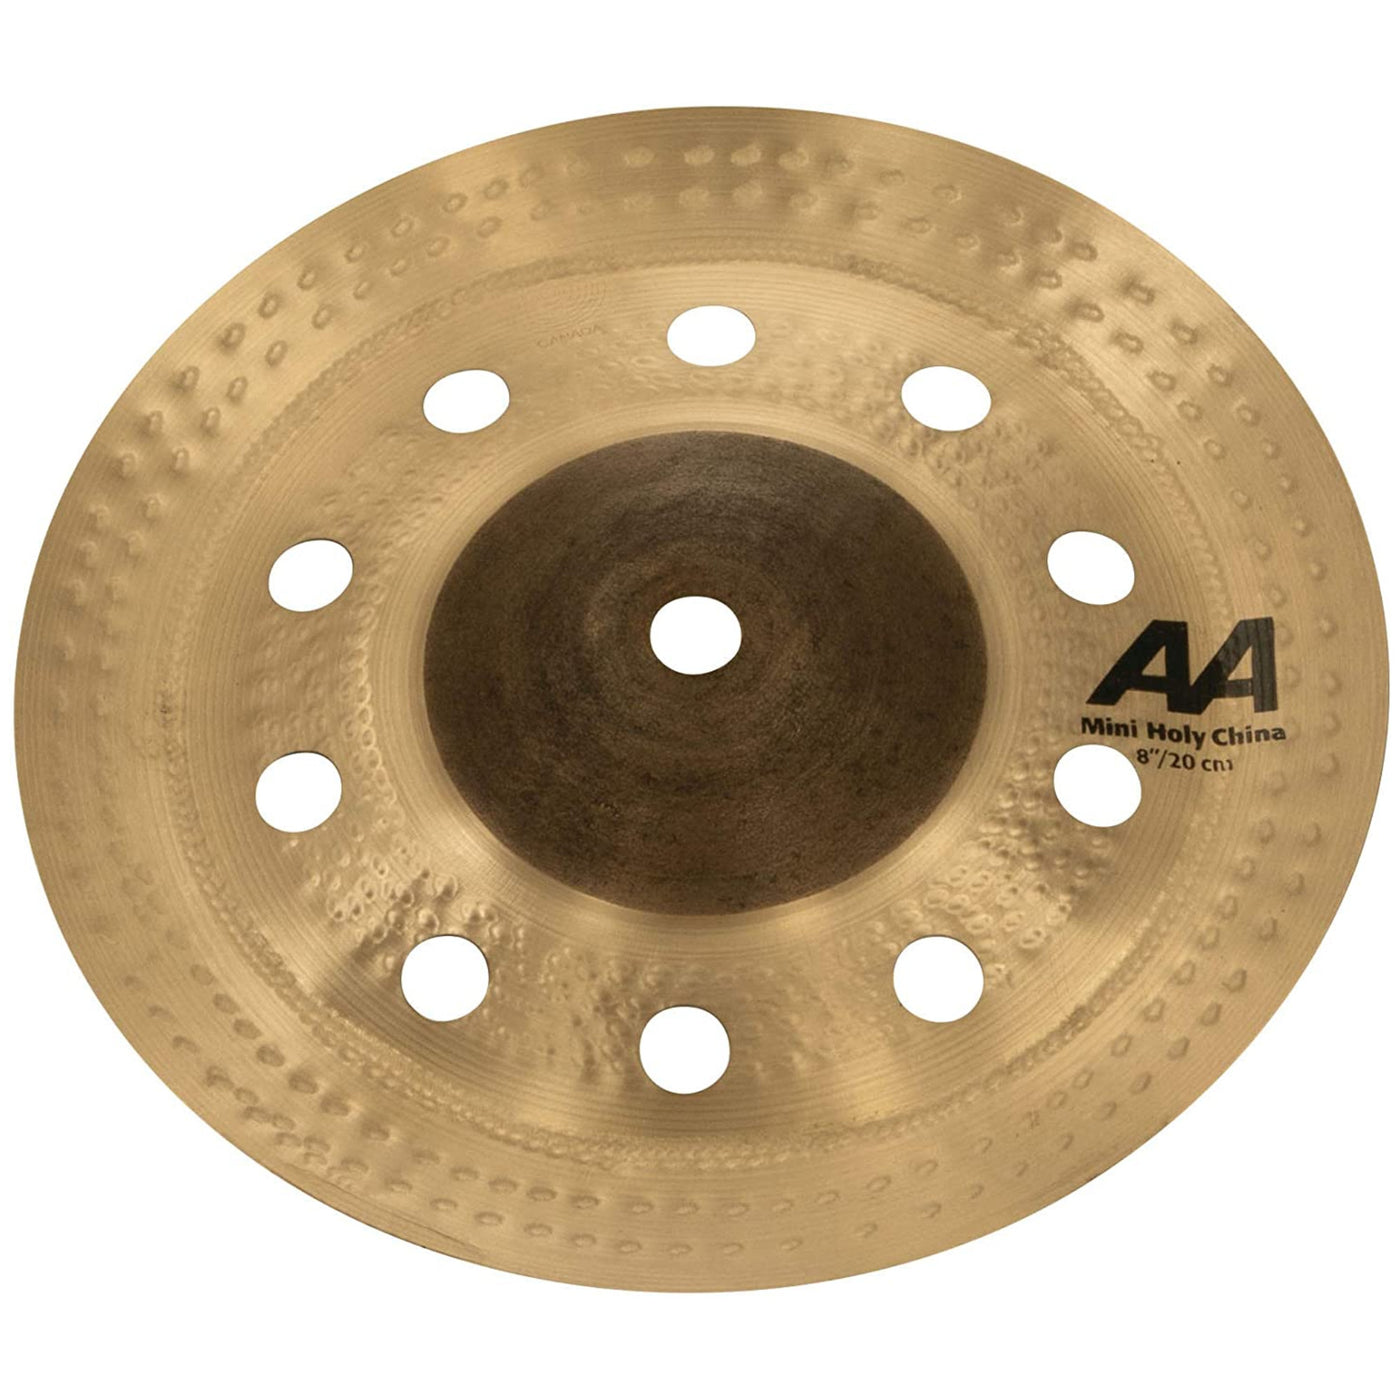 Sabian AA 8” Mini Holy China Cymbal, Brass (20816CS)